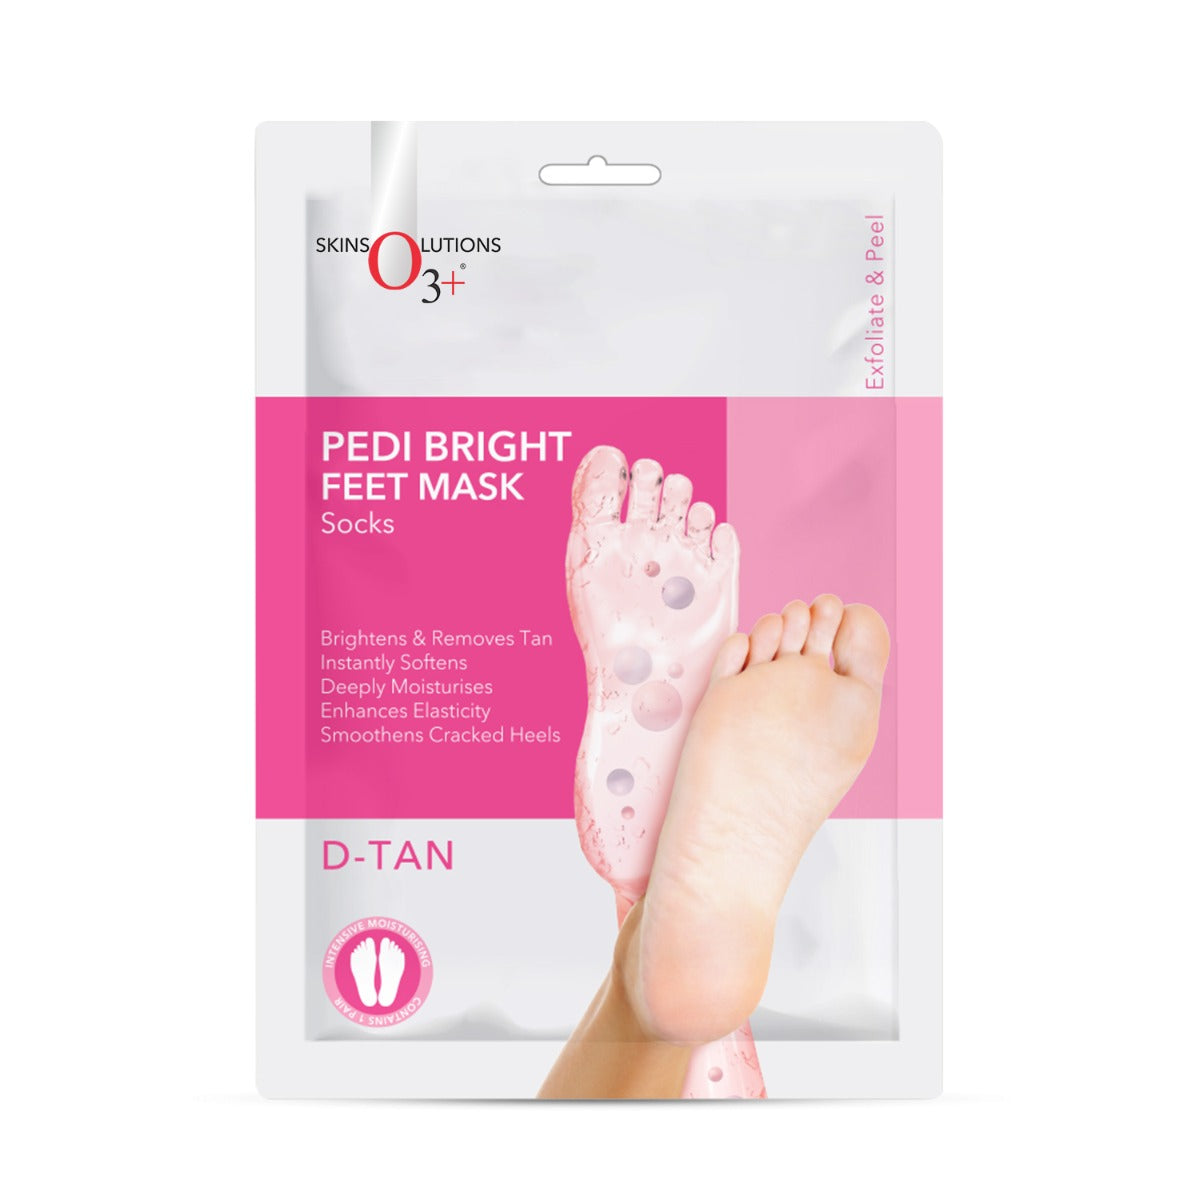 Pedi Bright Foot Socks Cream Mask (1 item)